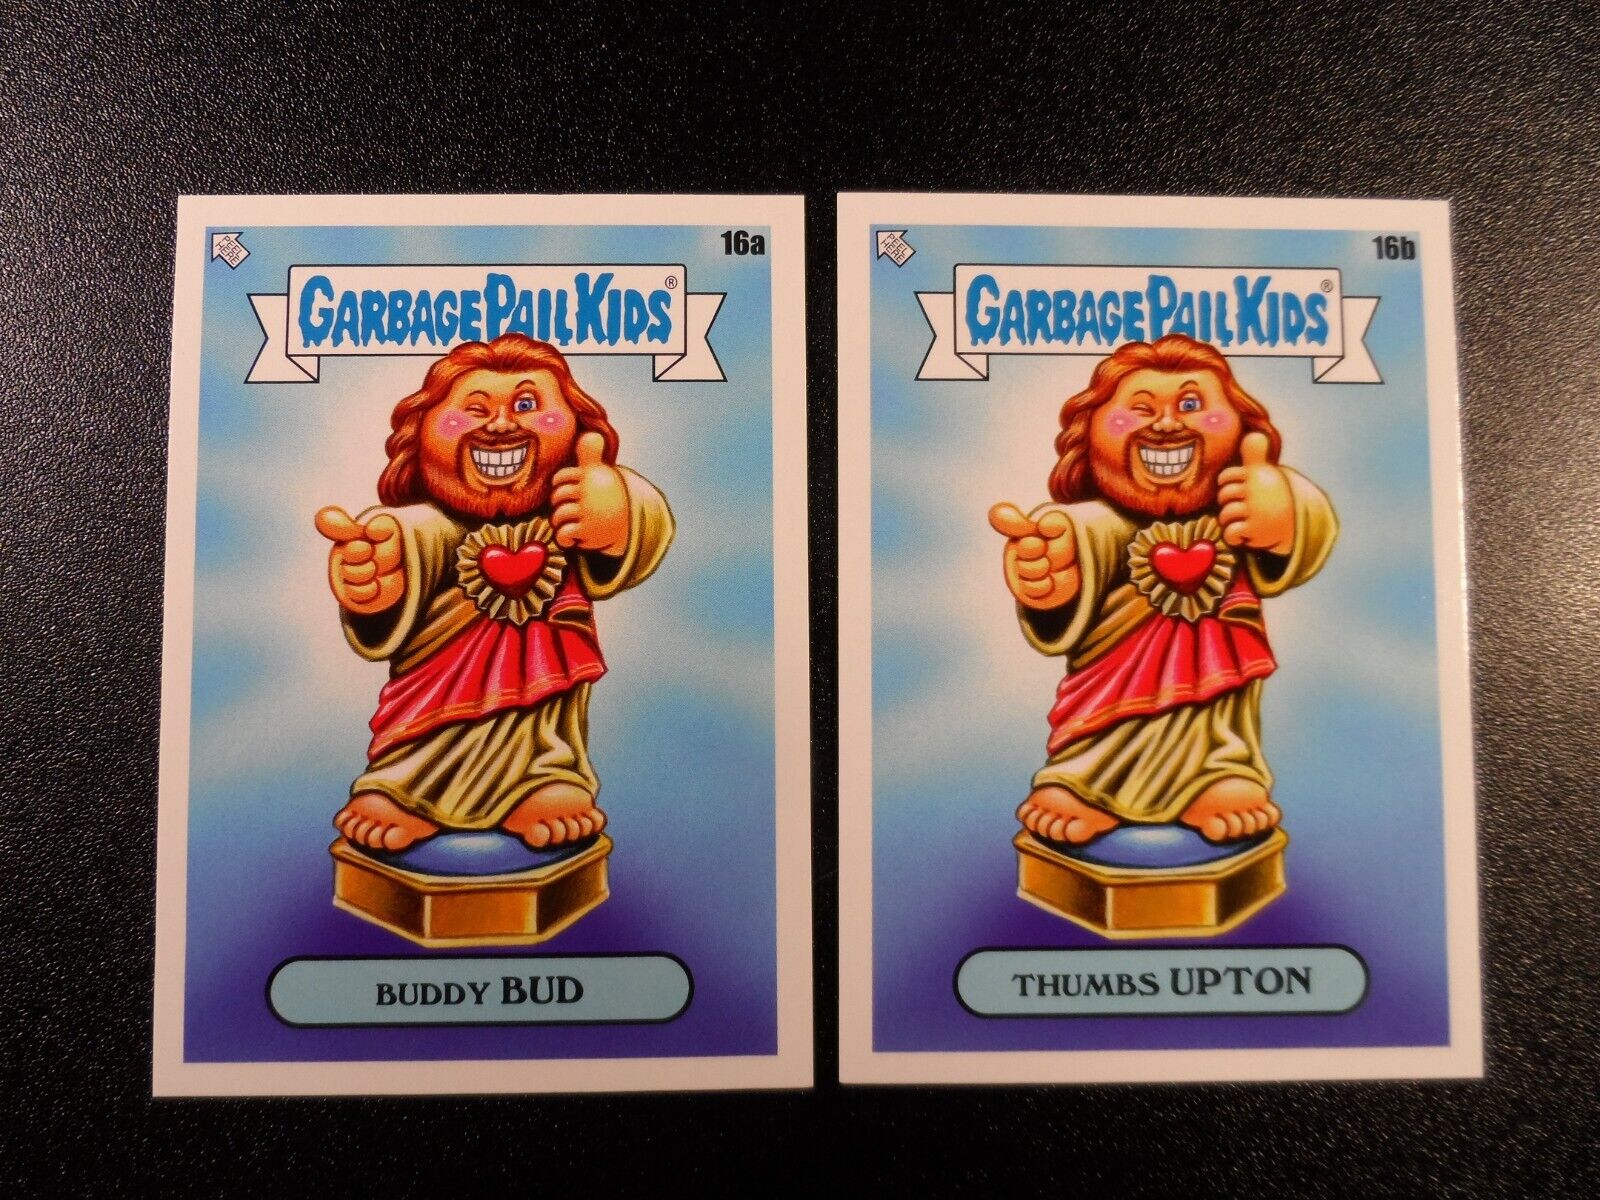 Buddy Christ Kevin Smith Dogma Clerks II Spoof Garbage Pail Kids 2 Card Set